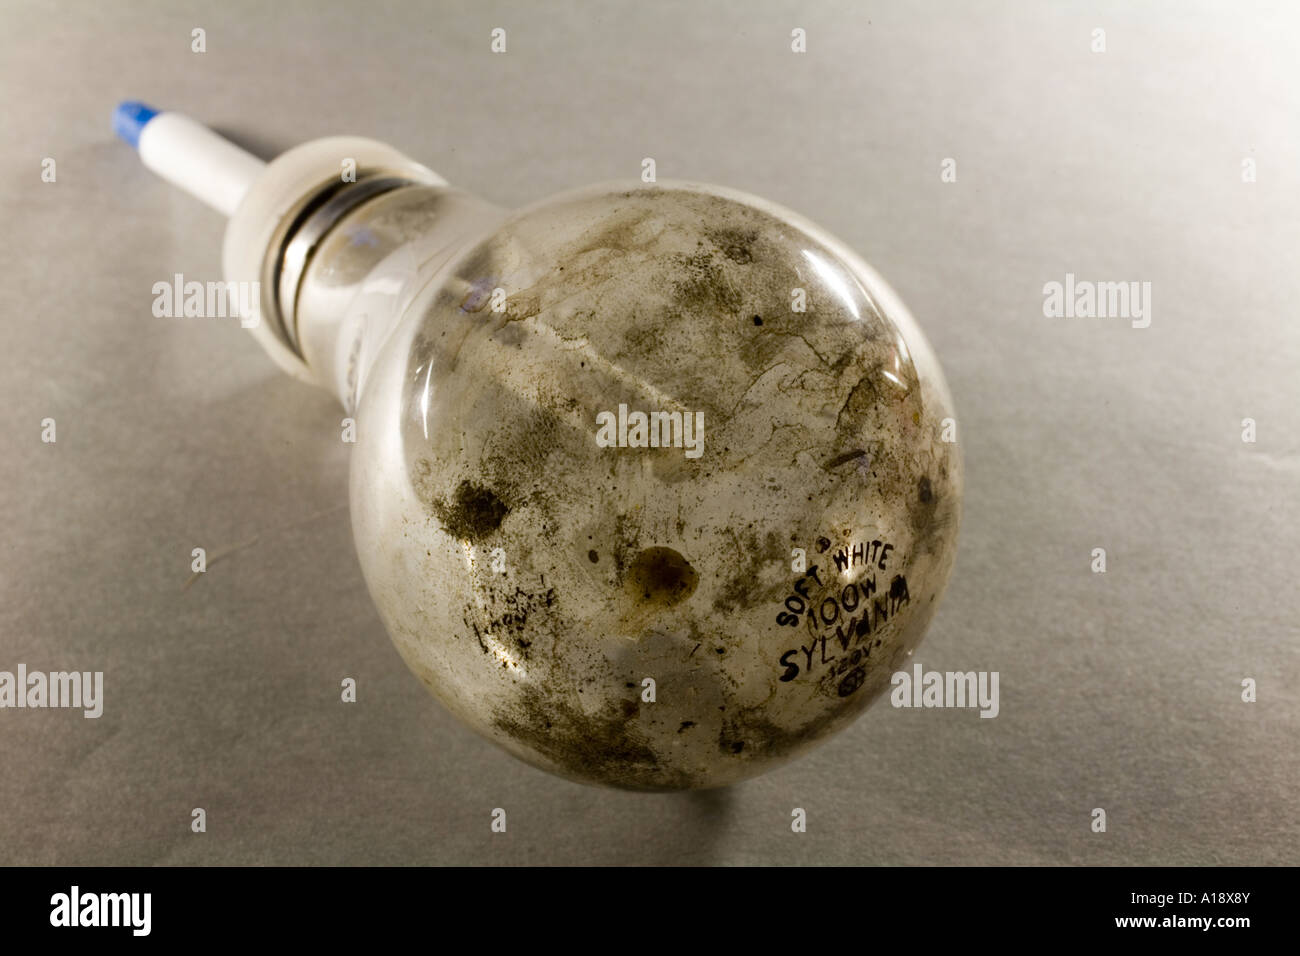 Lightbulb used to smoke meth amphetamine. Stock Photo